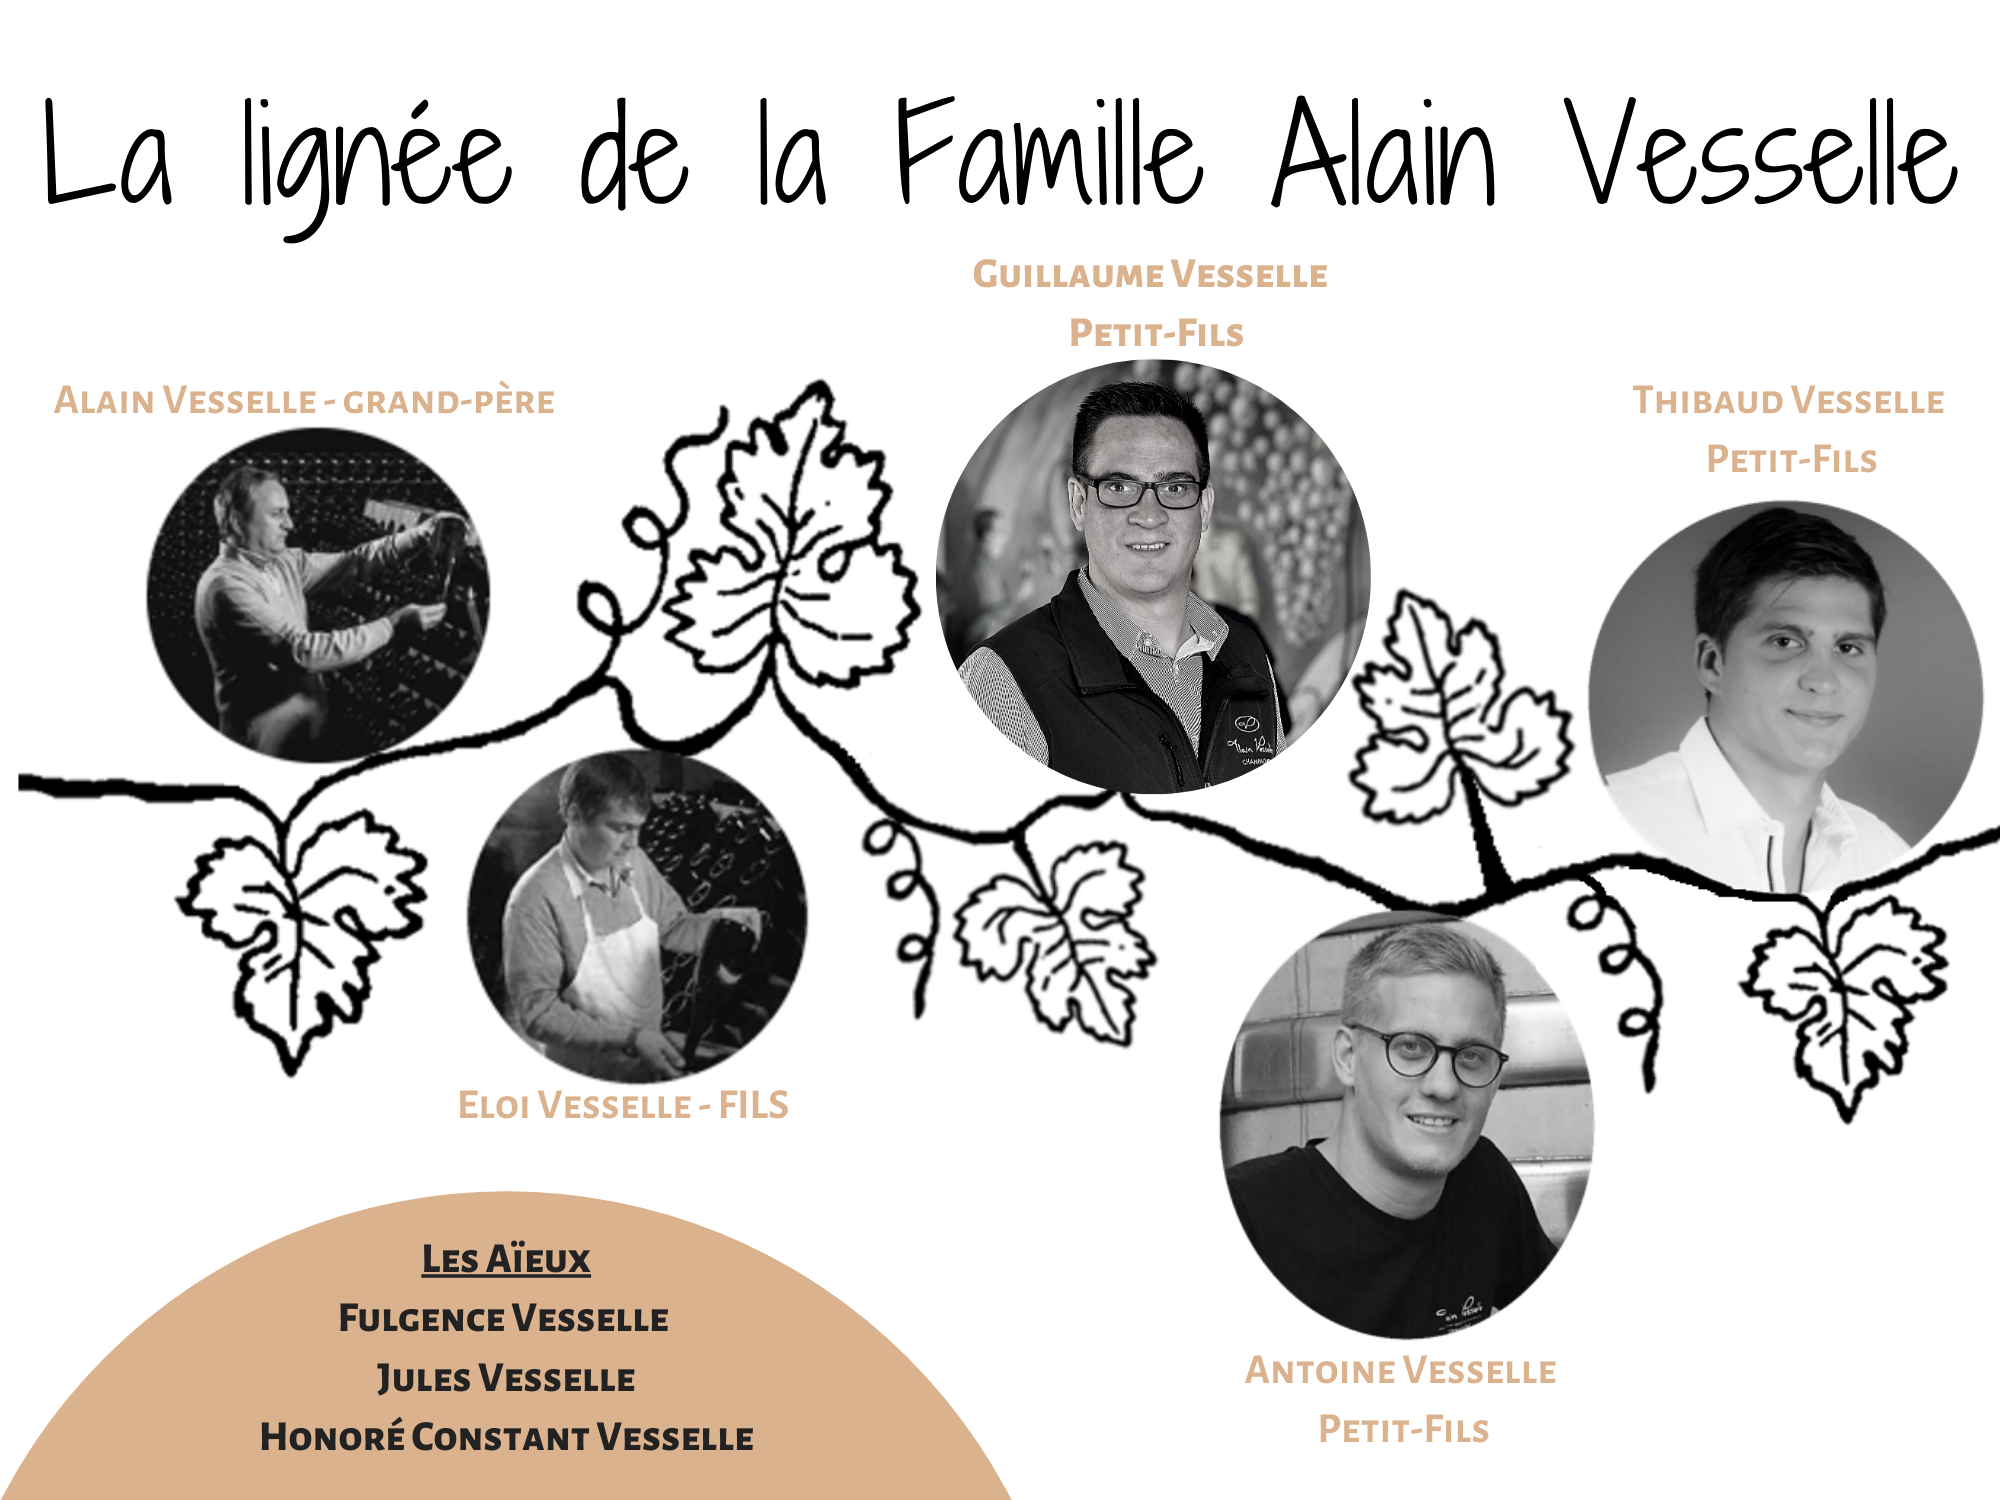 the Alain Vesselle family line